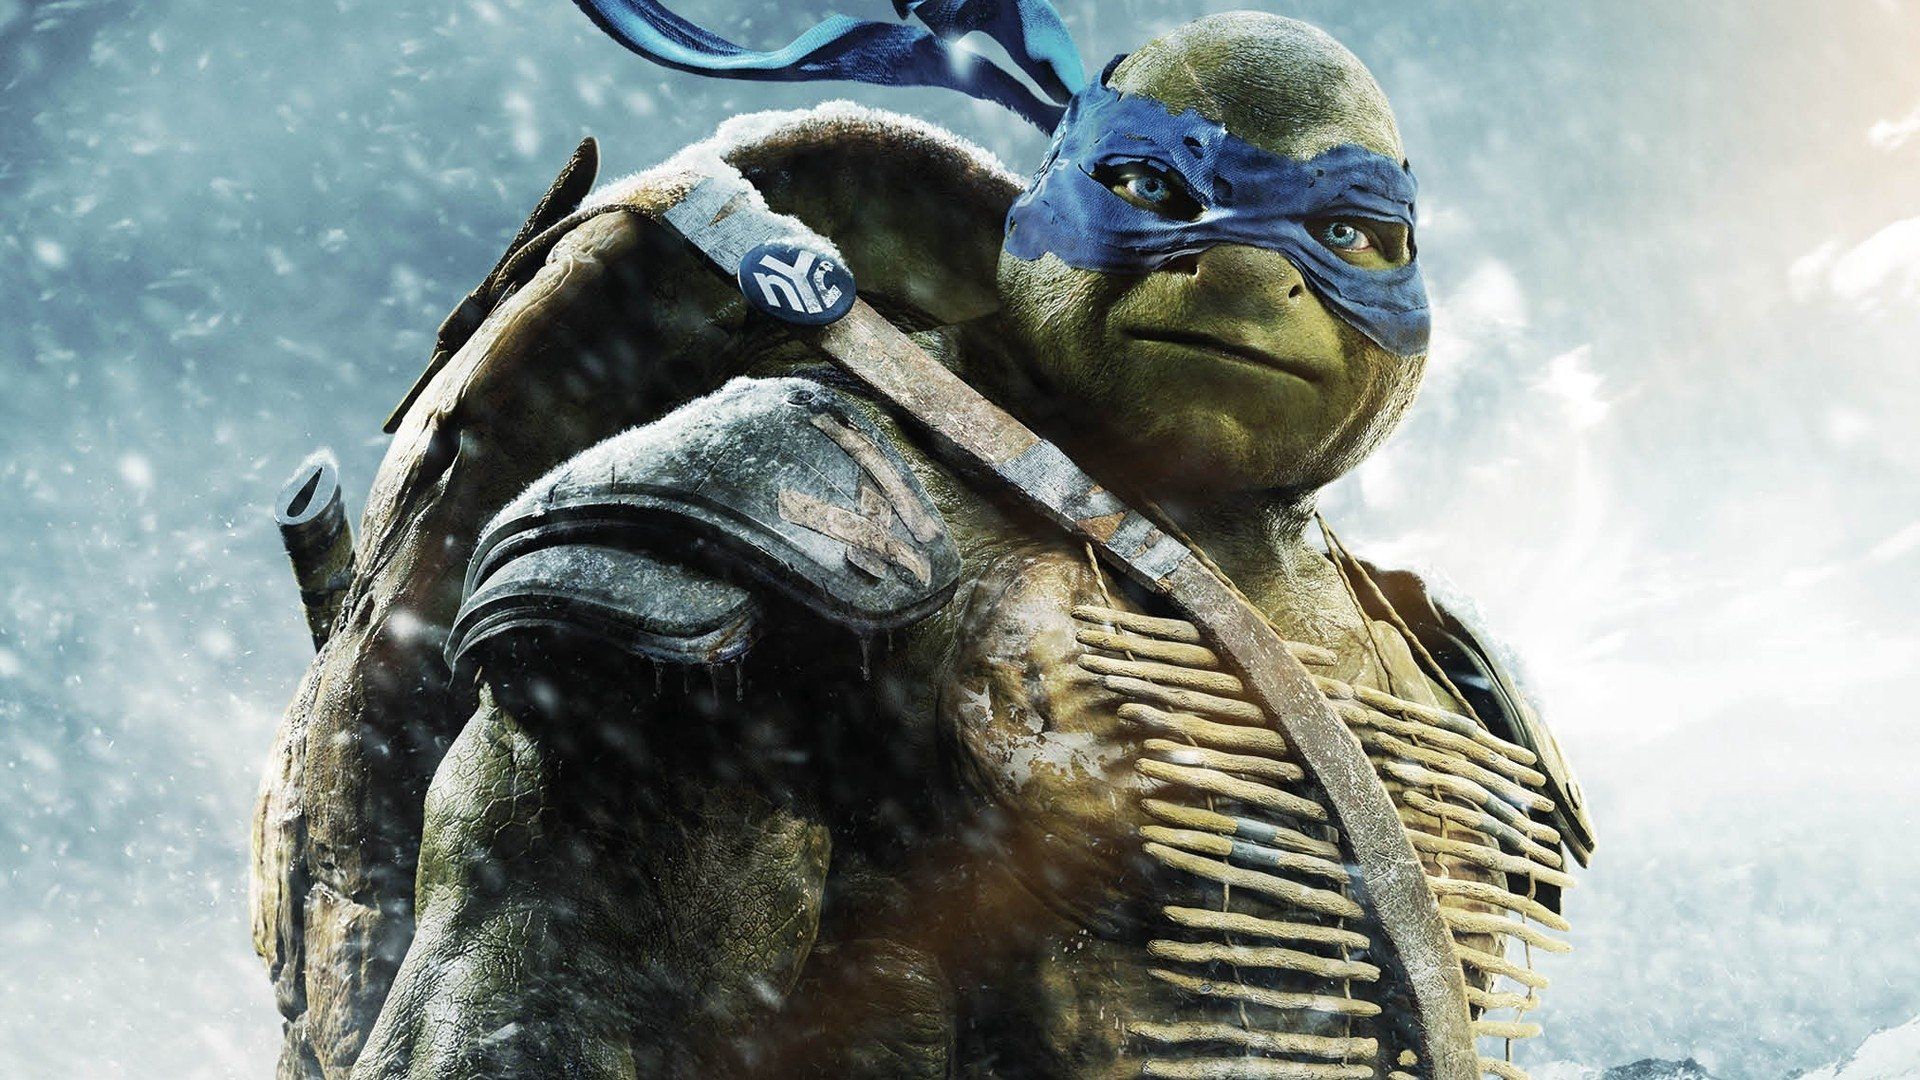 Teenage Mutant Ninja Turtles (2014) HD Wallpaper and Background Image